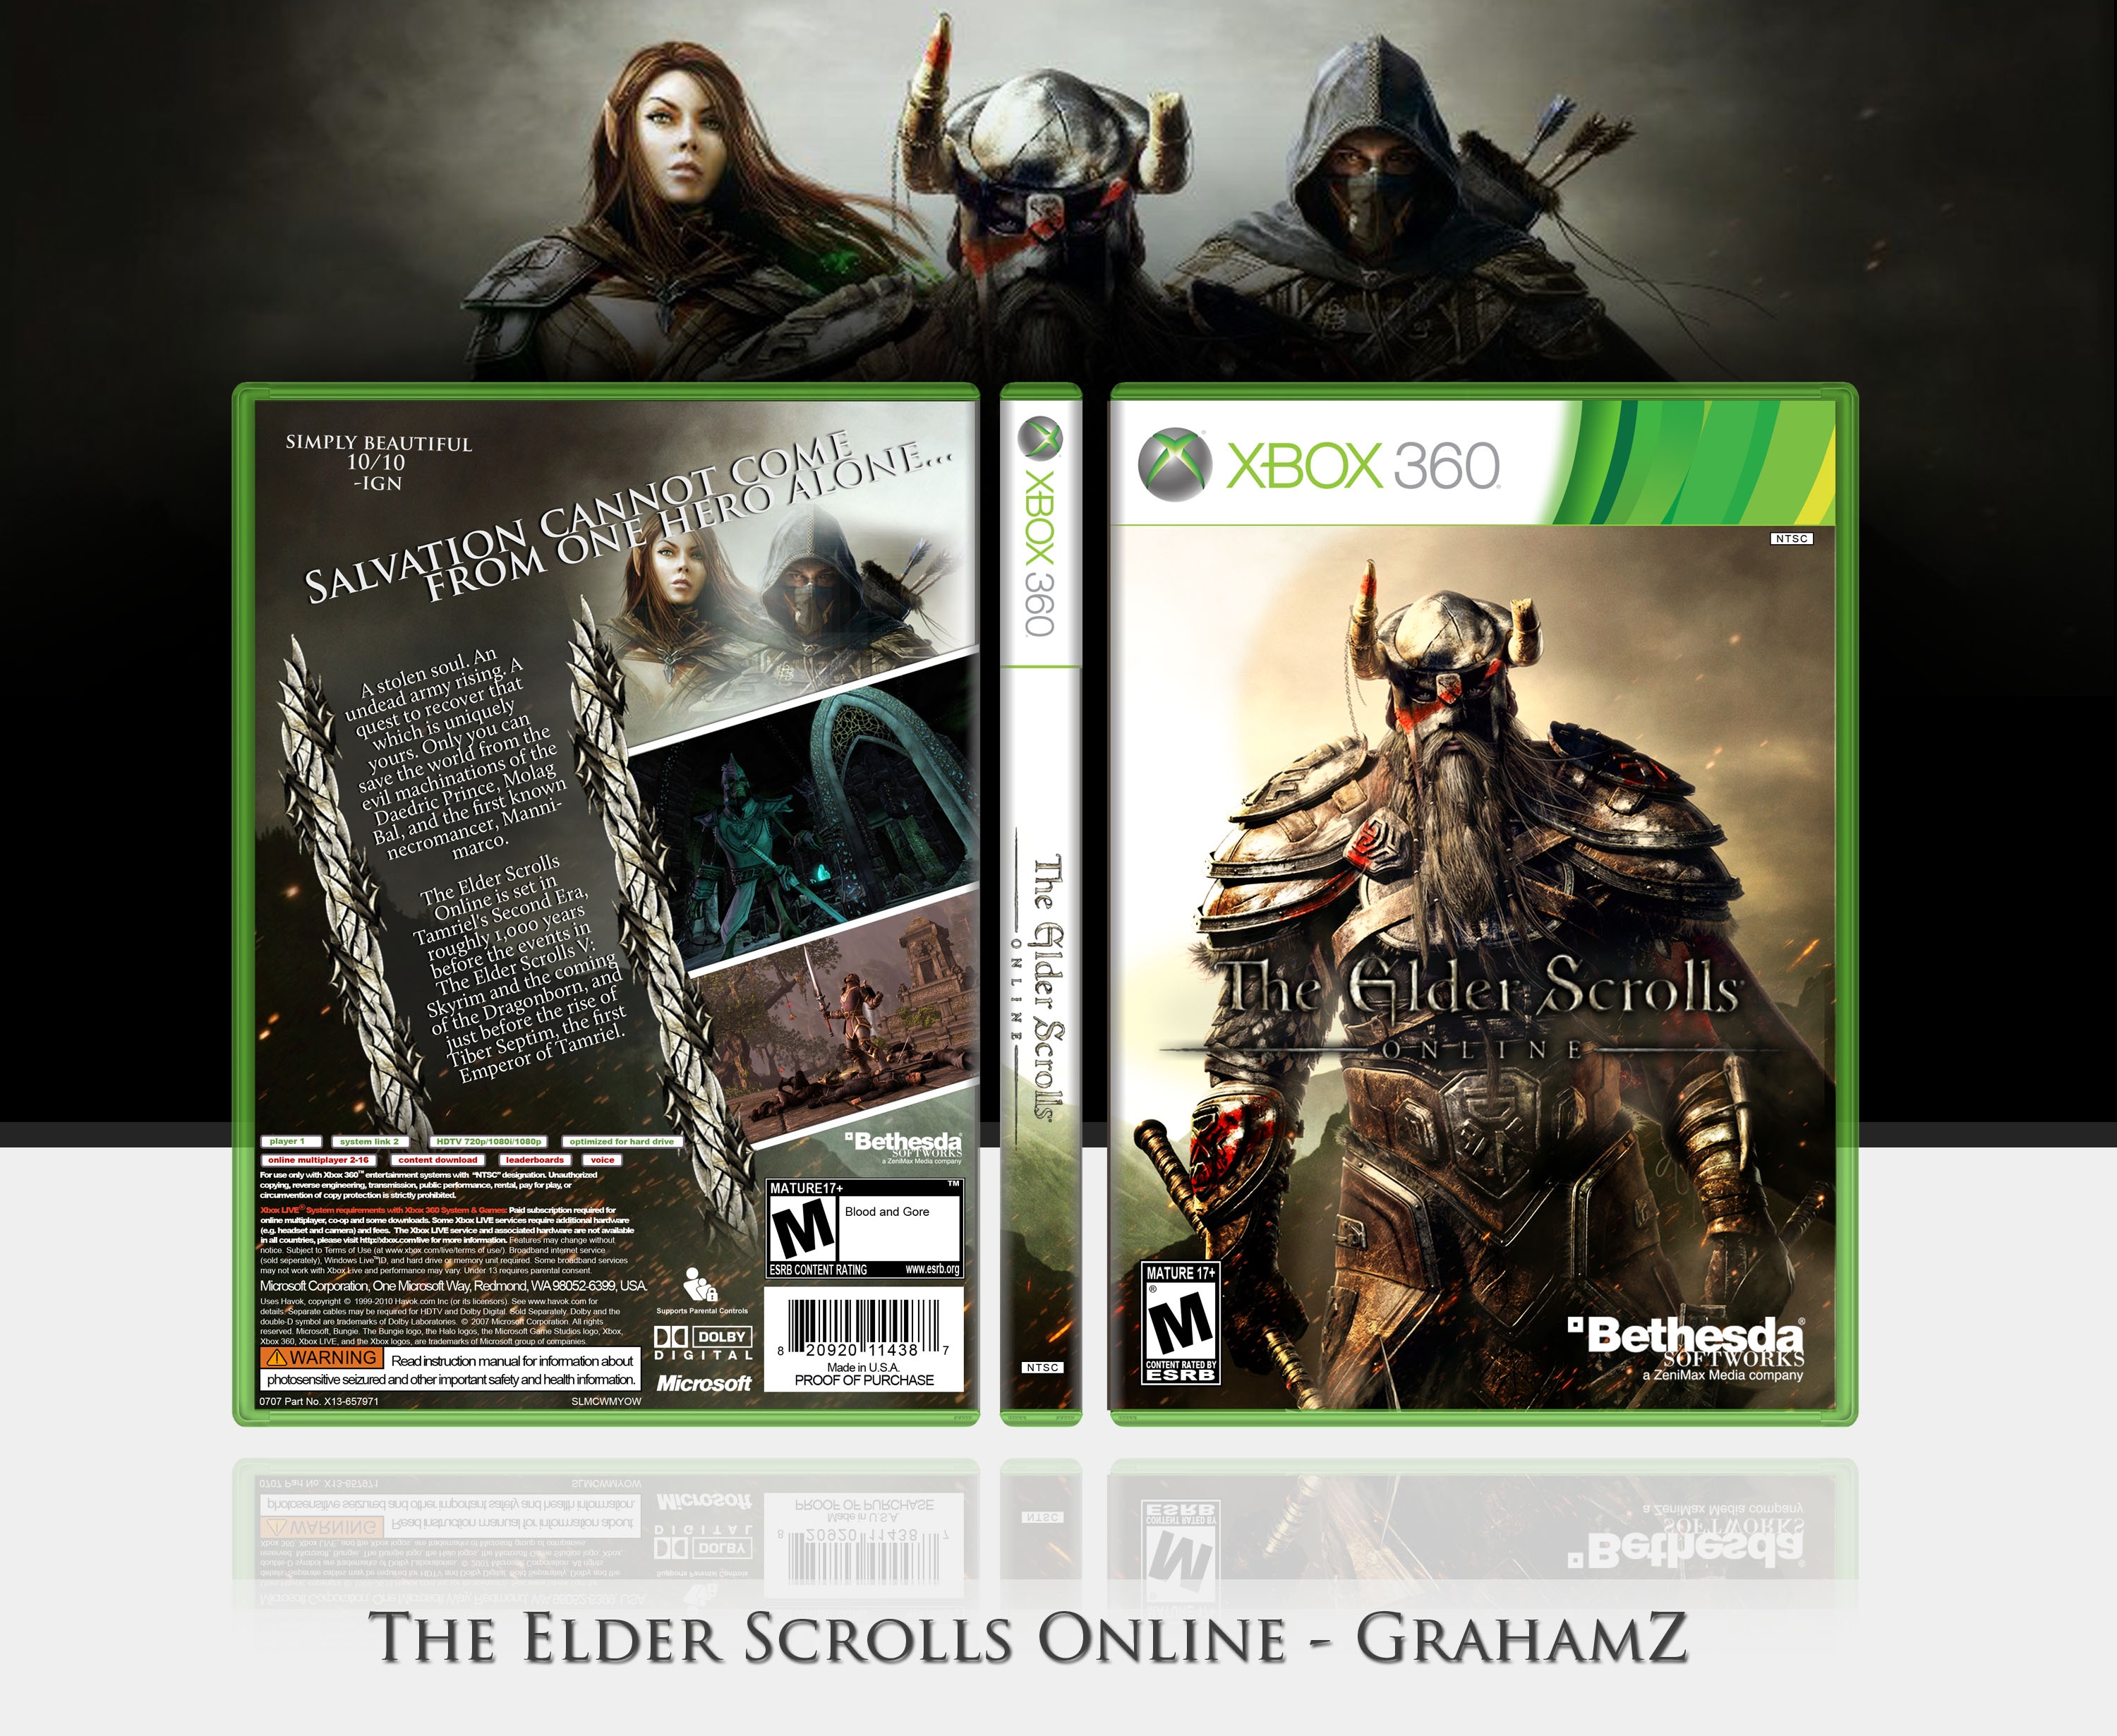 The Elder Scrolls Online box cover